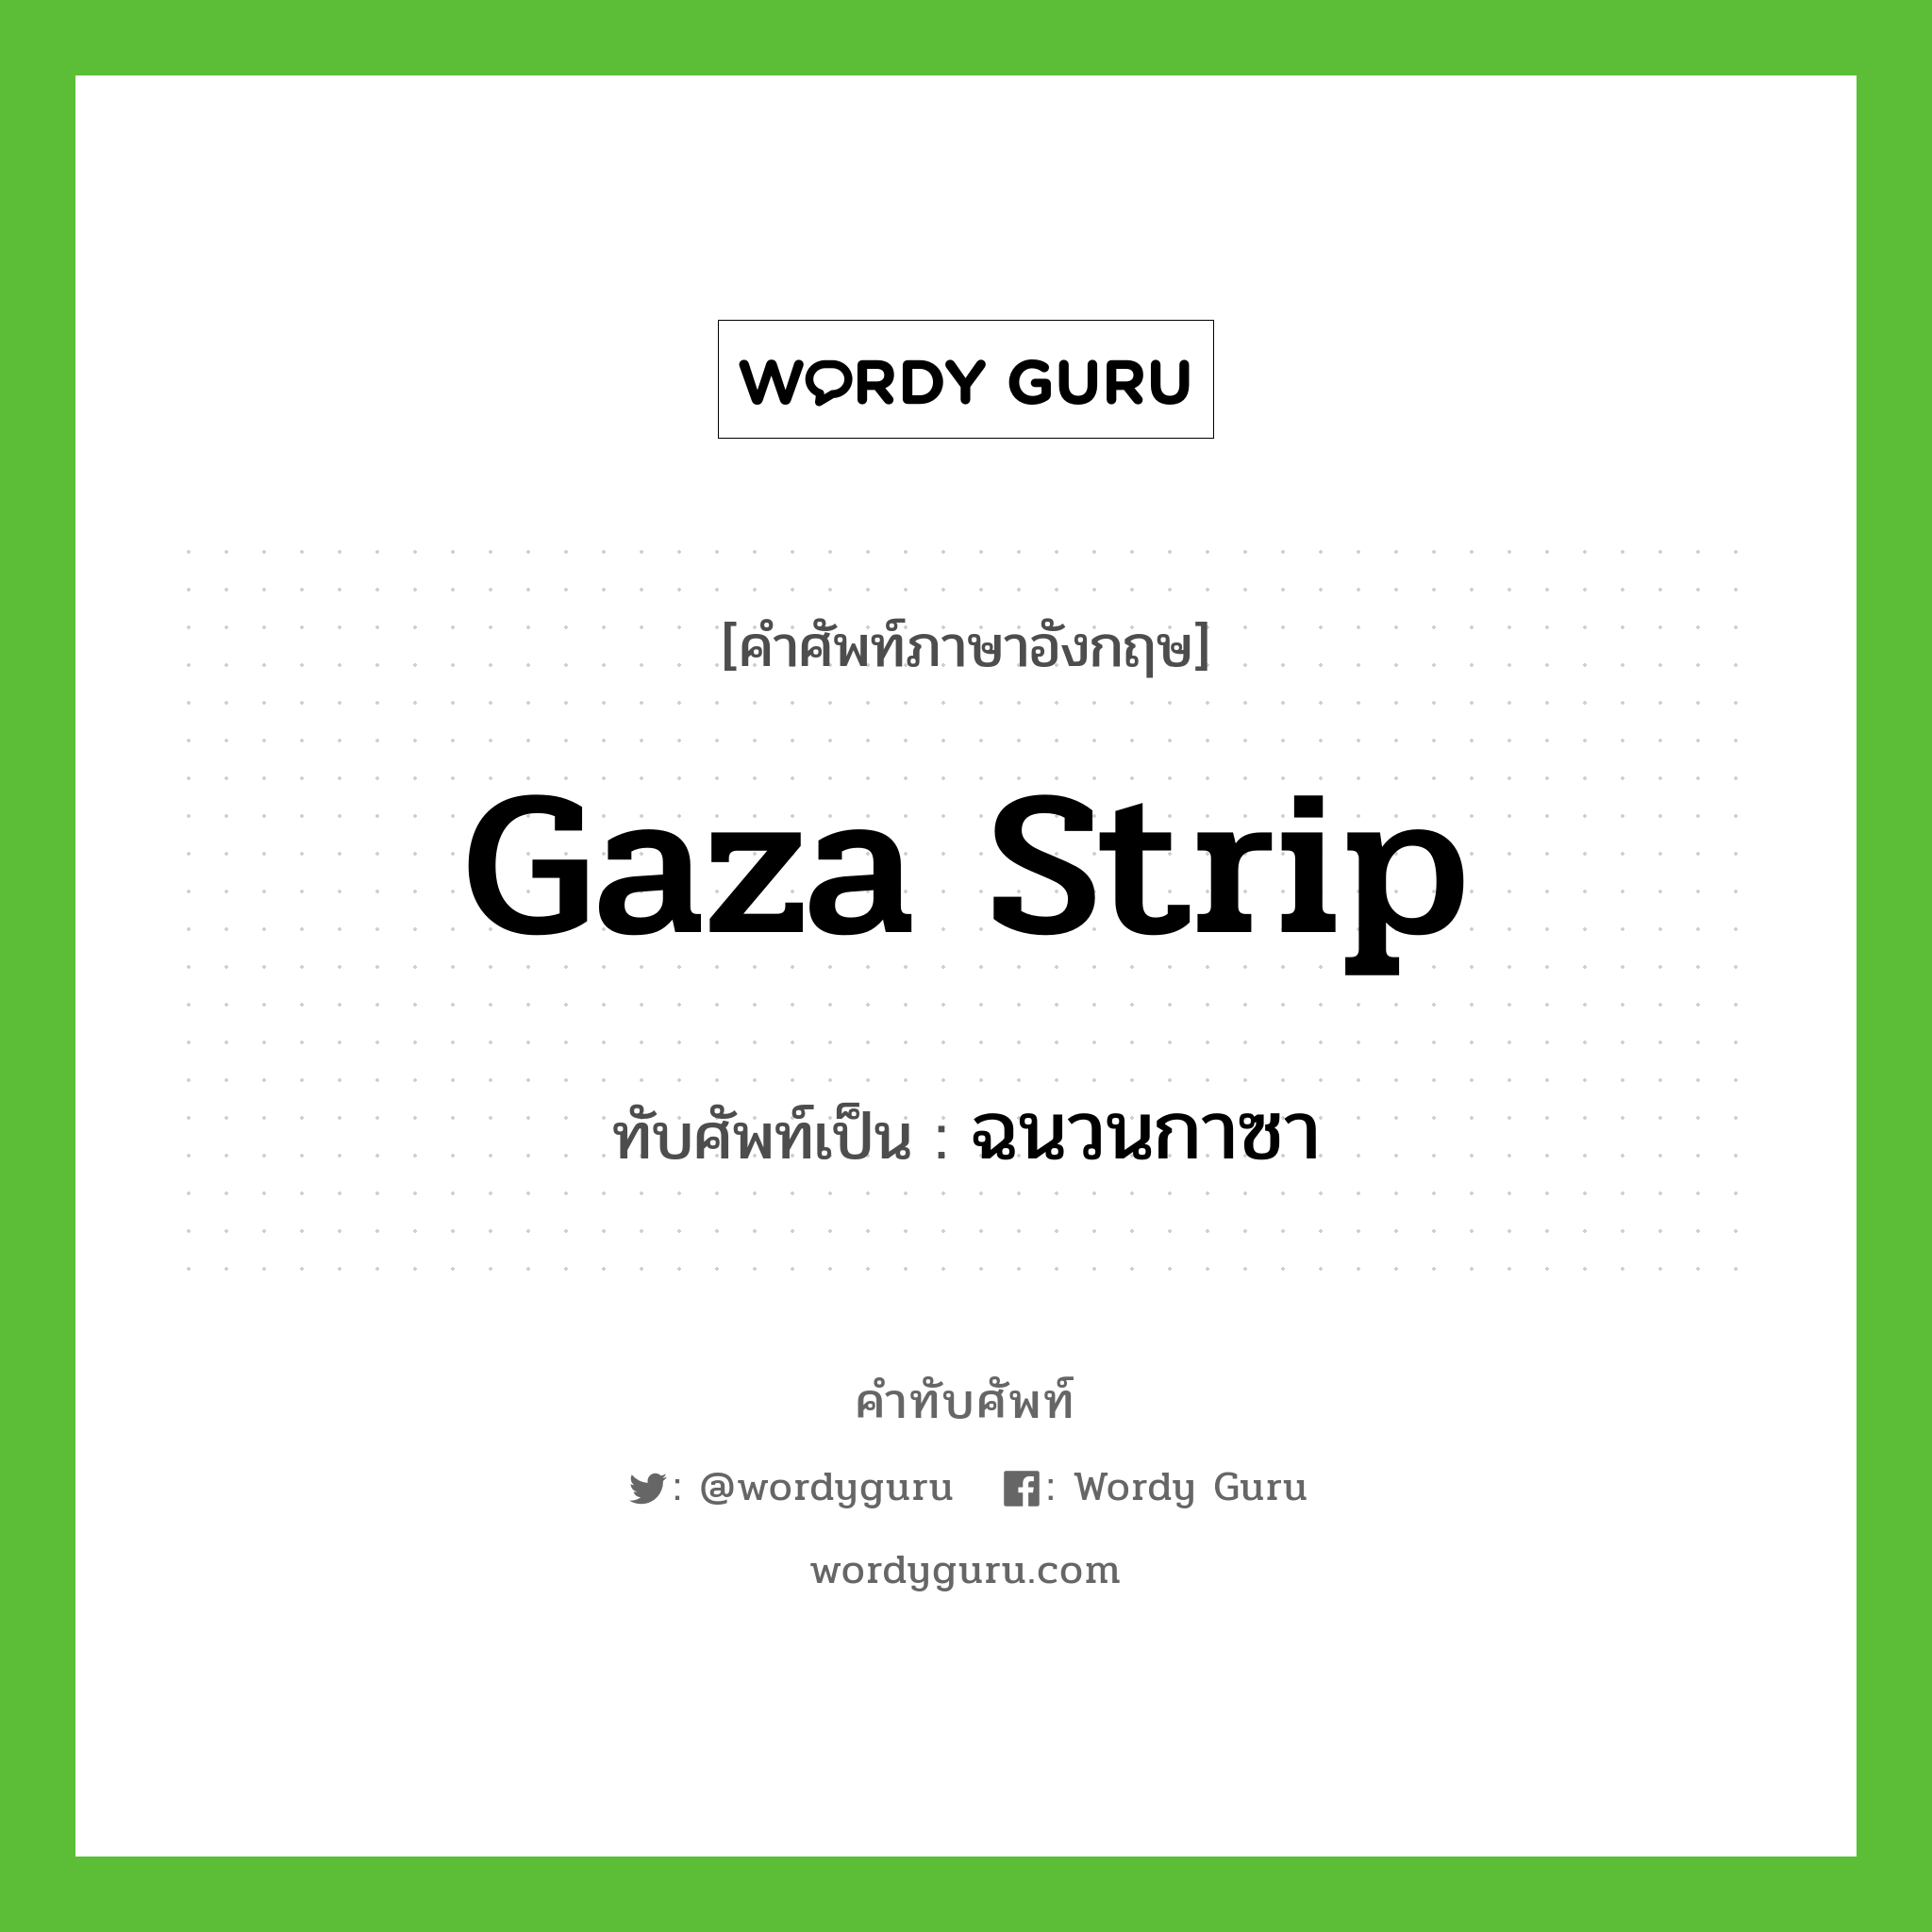 Gaza Strip เขียนเป็นคำไทยว่าอะไร?, คำศัพท์ภาษาอังกฤษ Gaza Strip ทับศัพท์เป็น ฉนวนกาซา